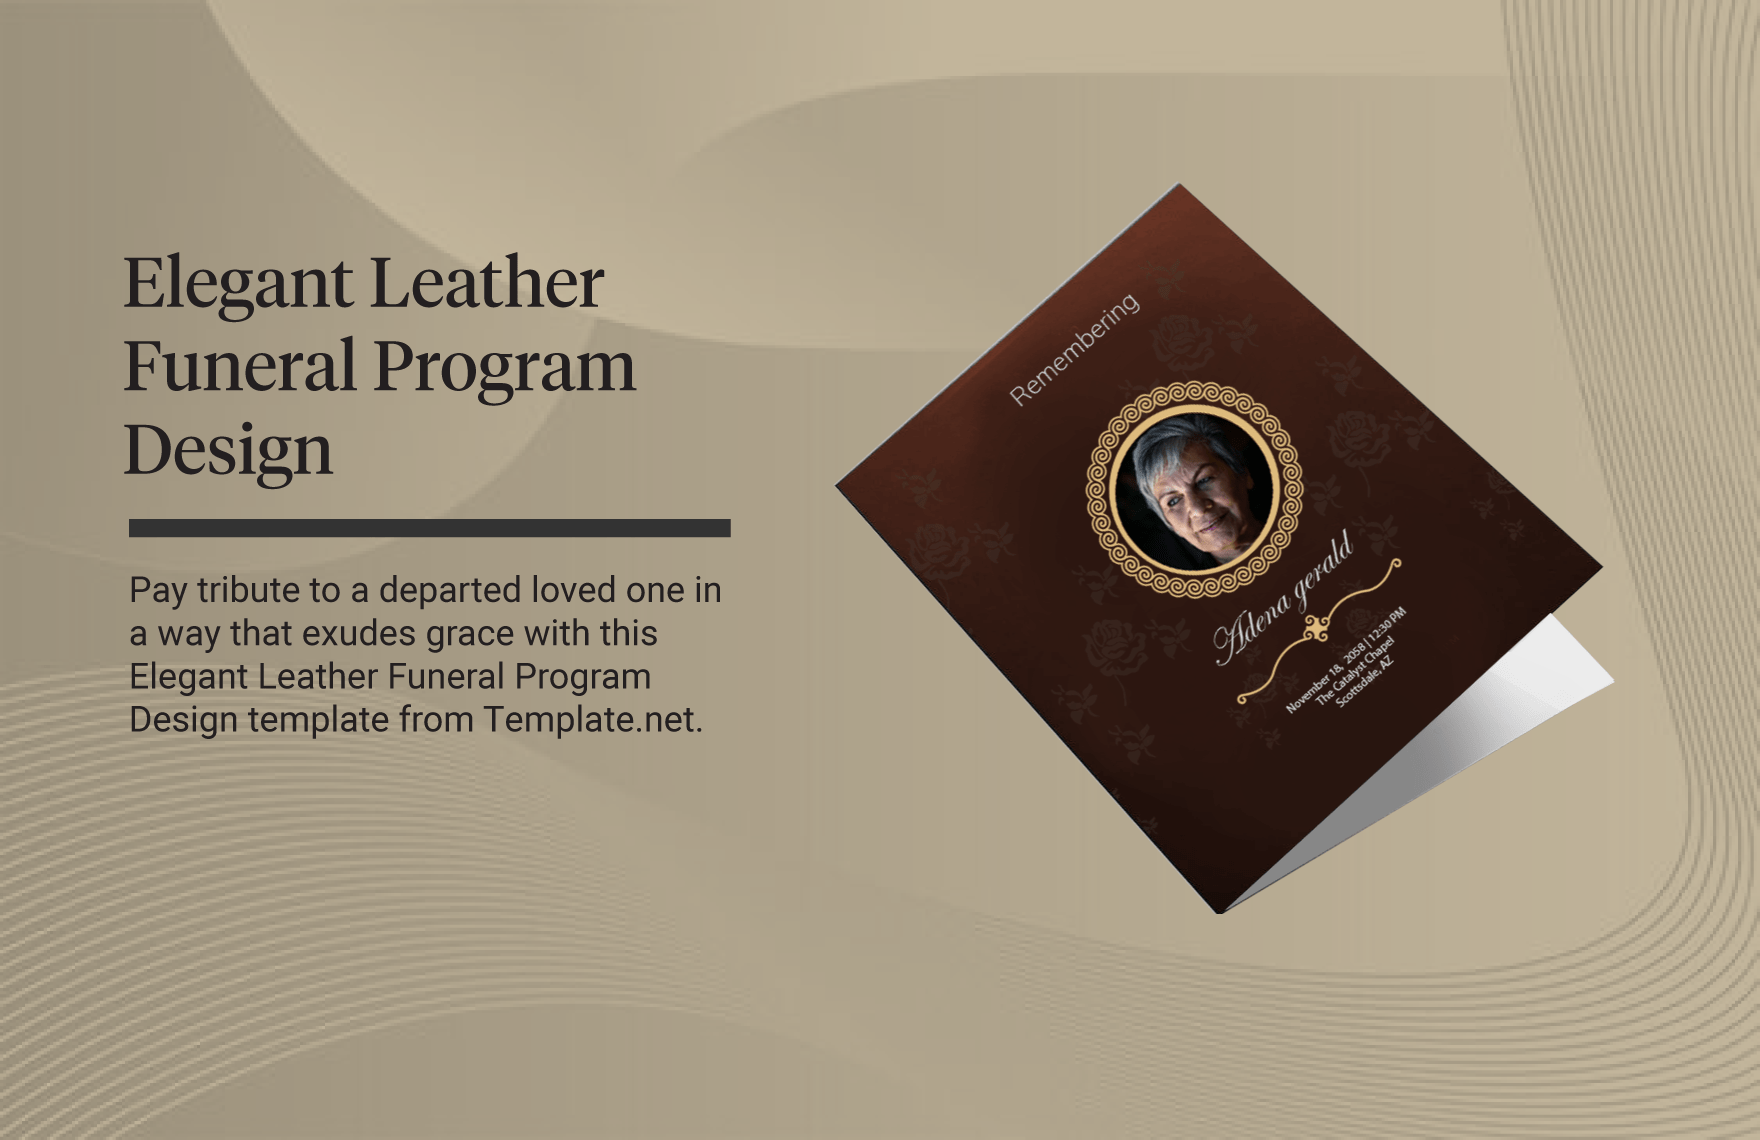 Elegant Leather Funeral Program Design